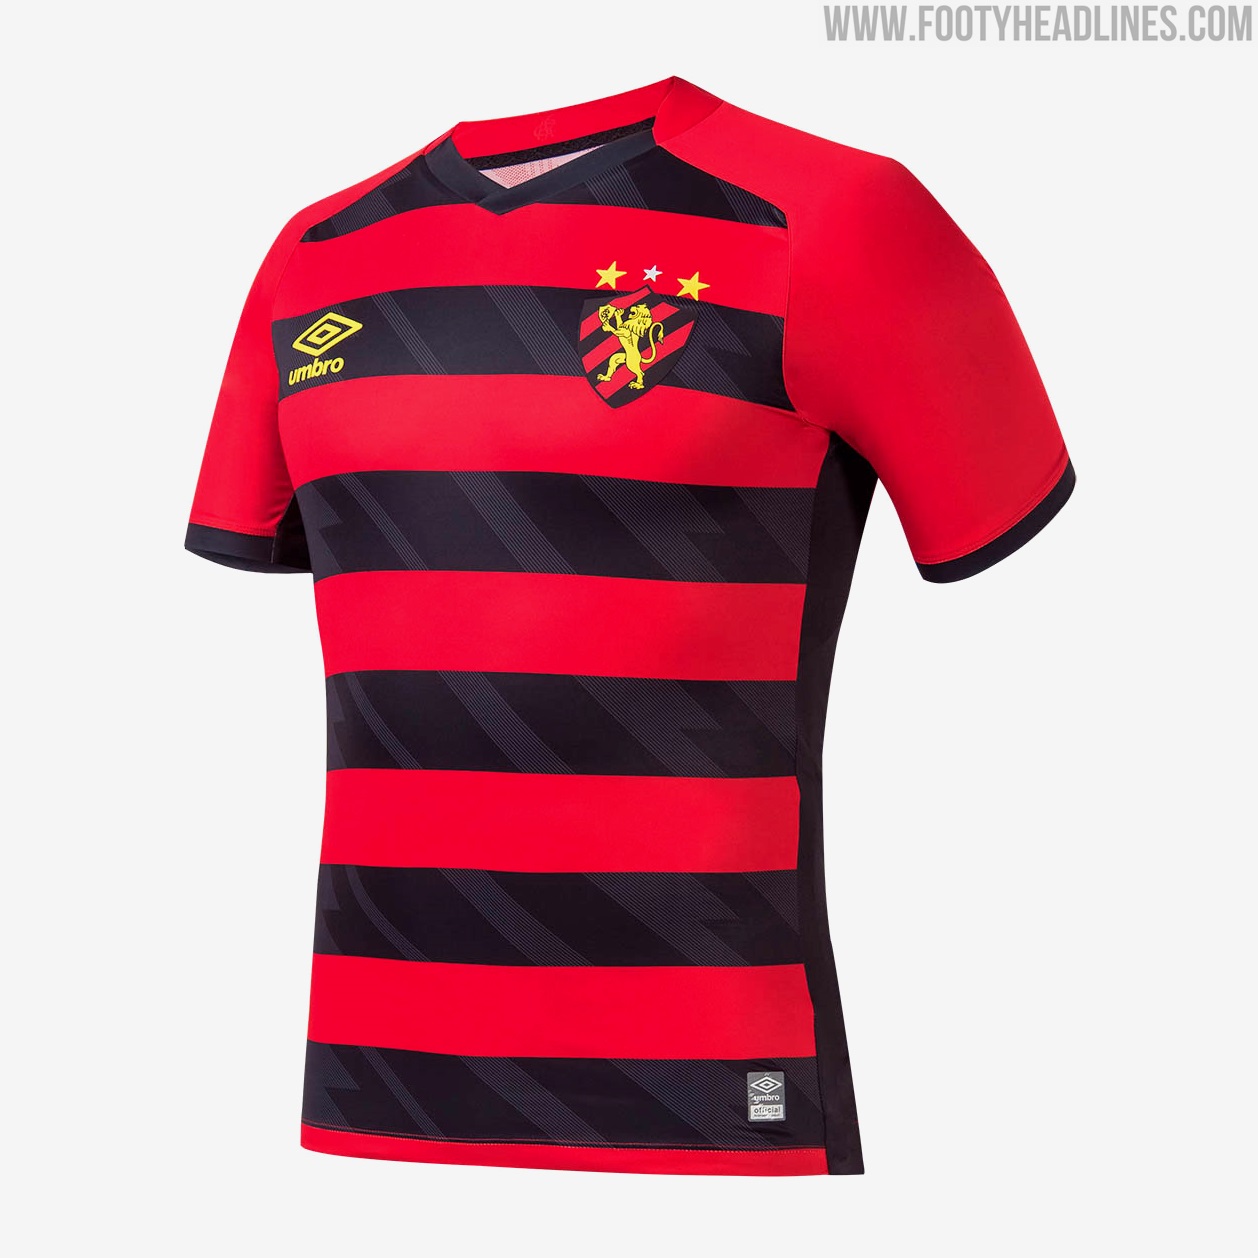 Sport Recife 21-22 Home & Away Kits Released - Footy Headlines